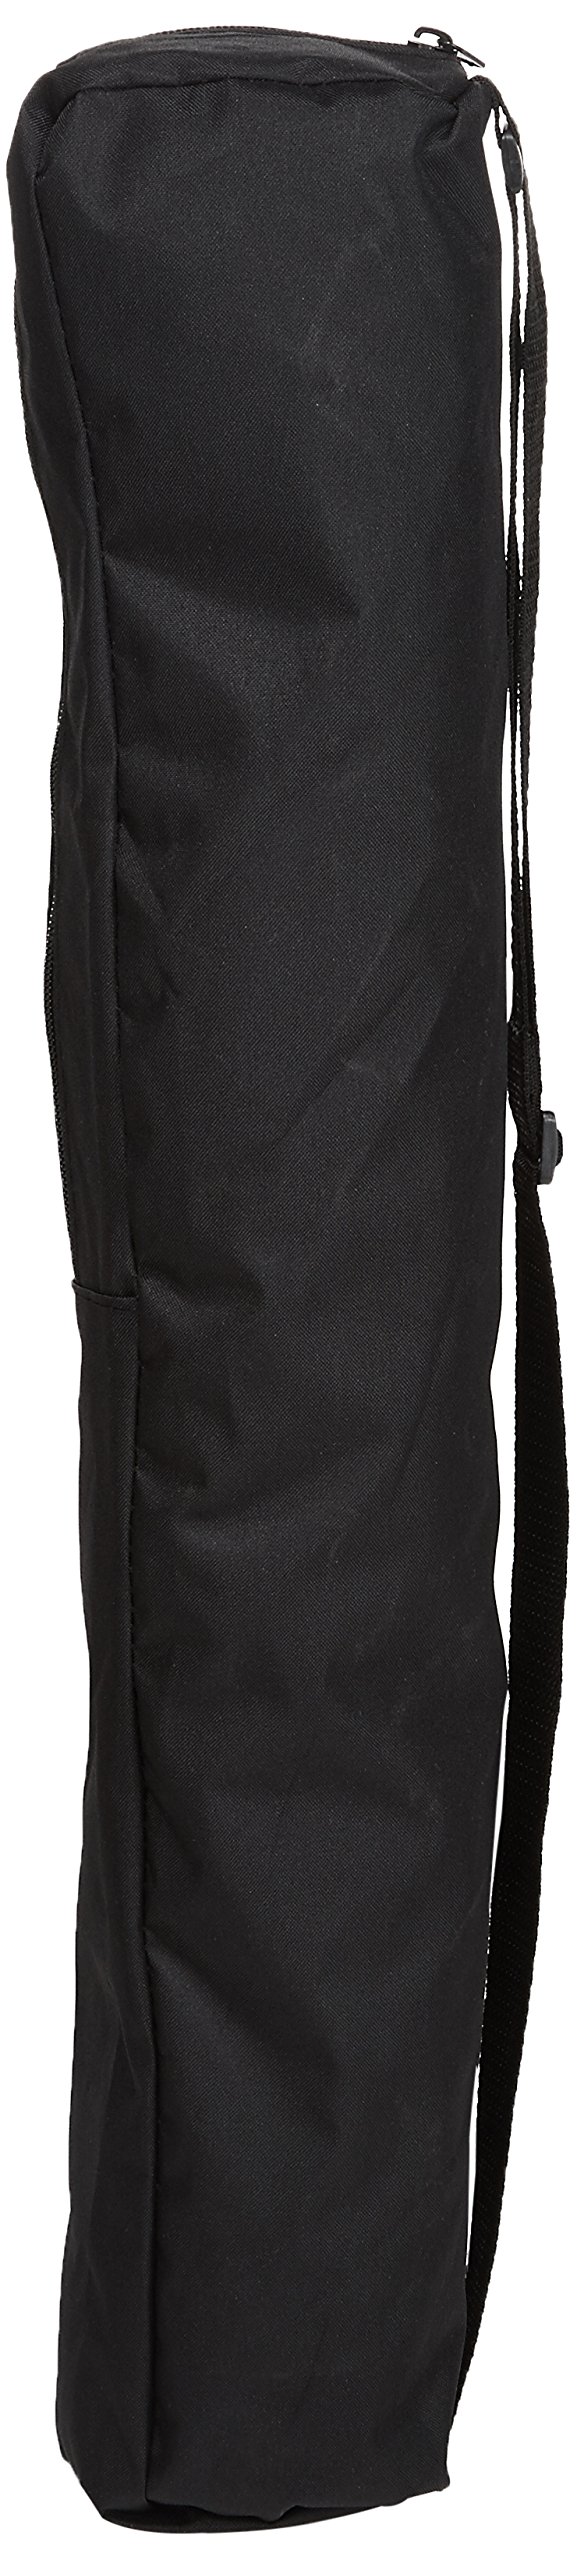 Amazon Basics 60-Inch Lightweight Tripod With Bag, Black